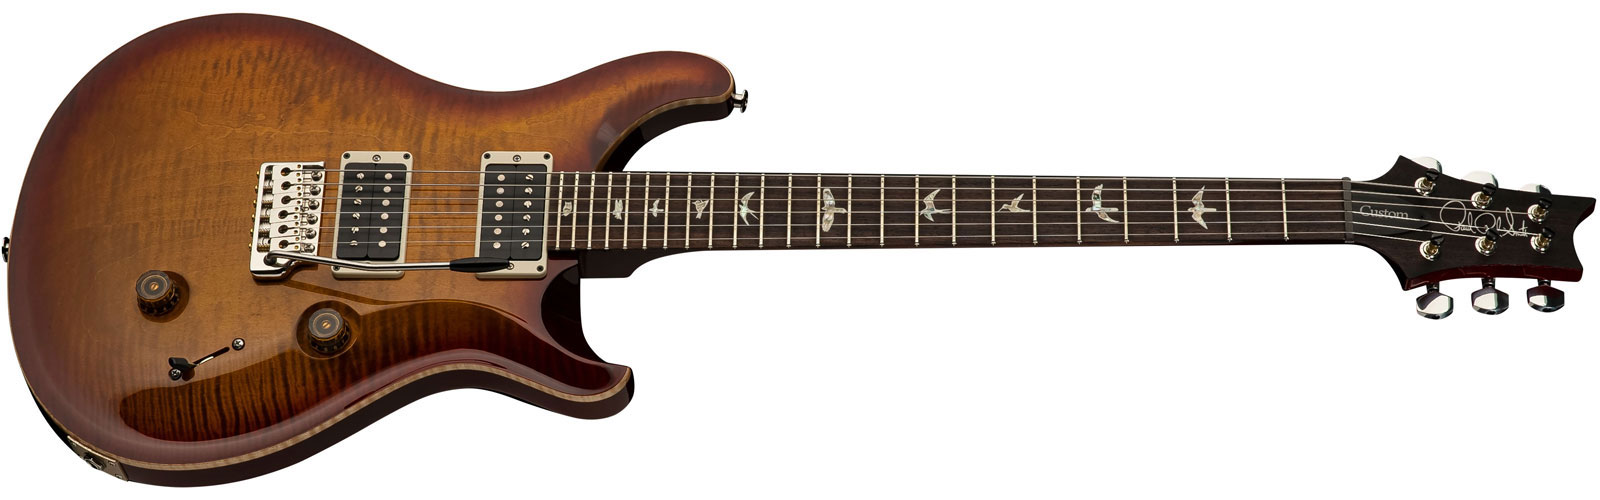 Prs Custom 24 Usa 2h Trem Rw - Dark Cherry Sunburst - Guitarra eléctrica de doble corte - Variation 1